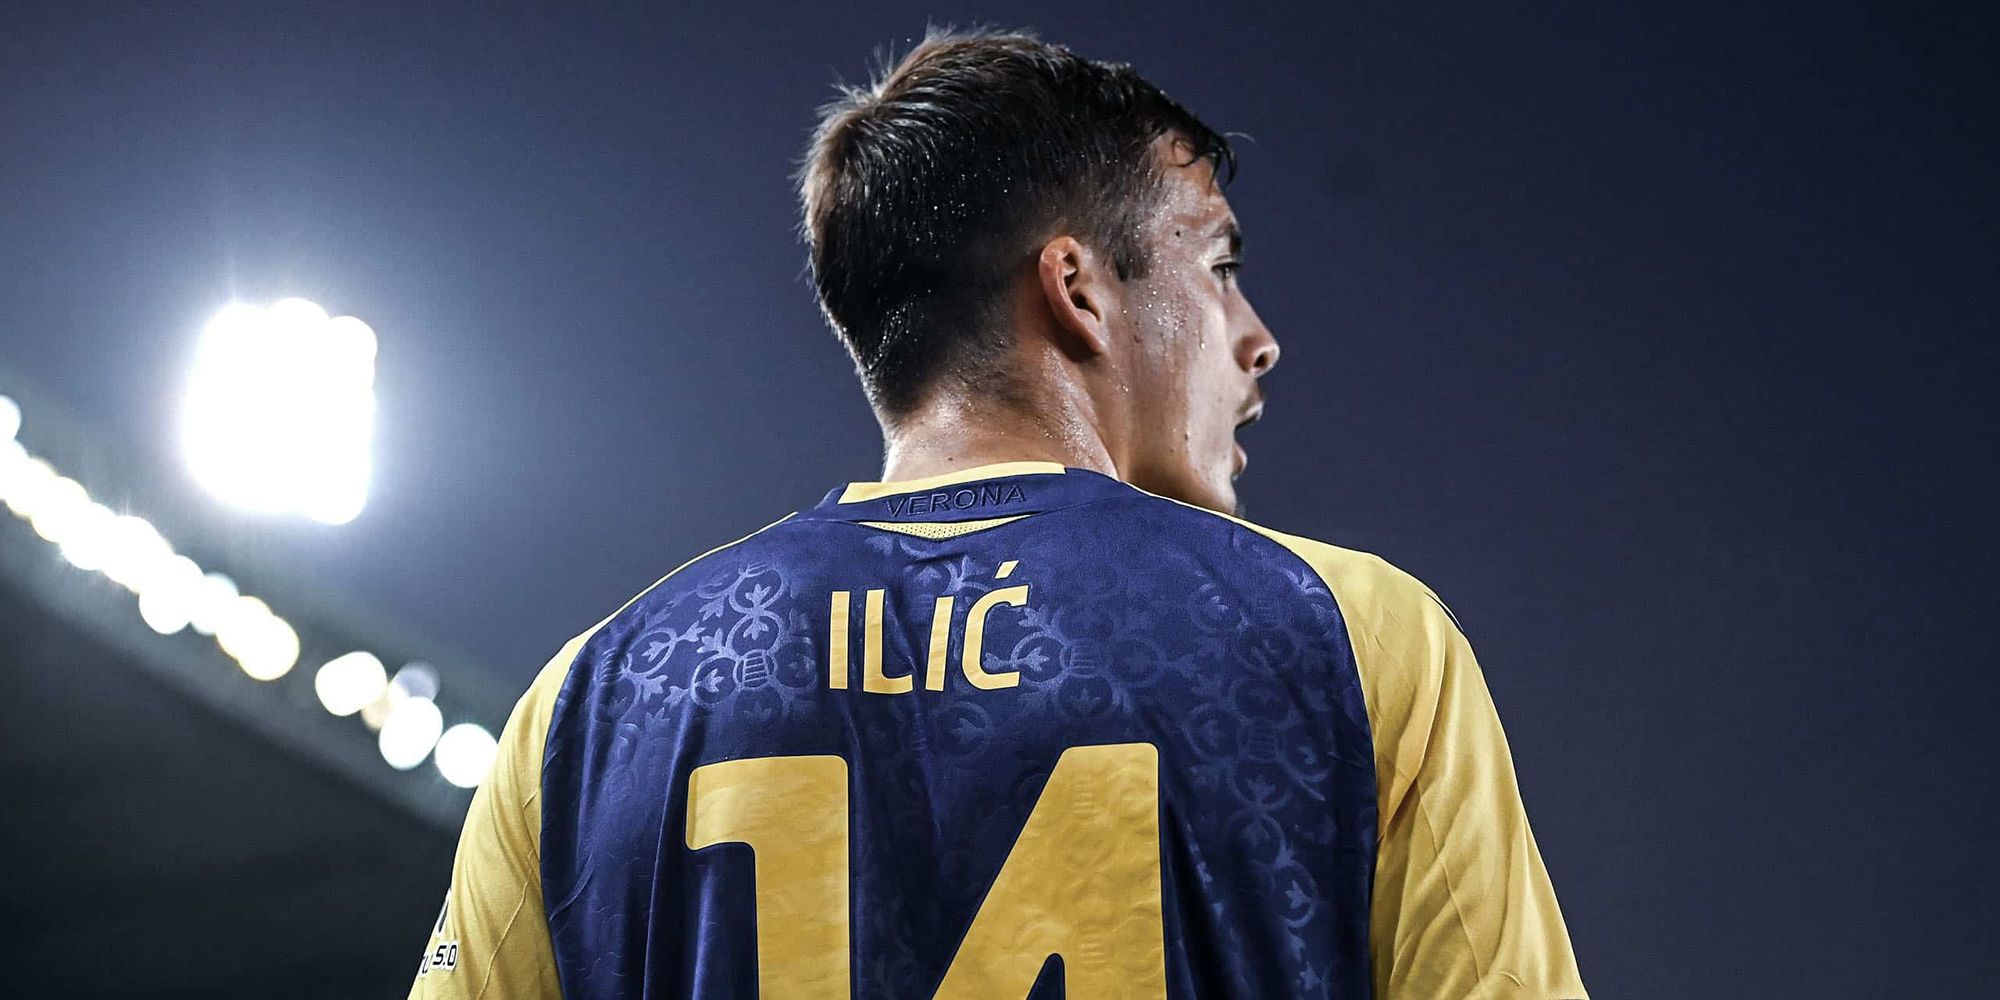 Football Player Ivan Ilic